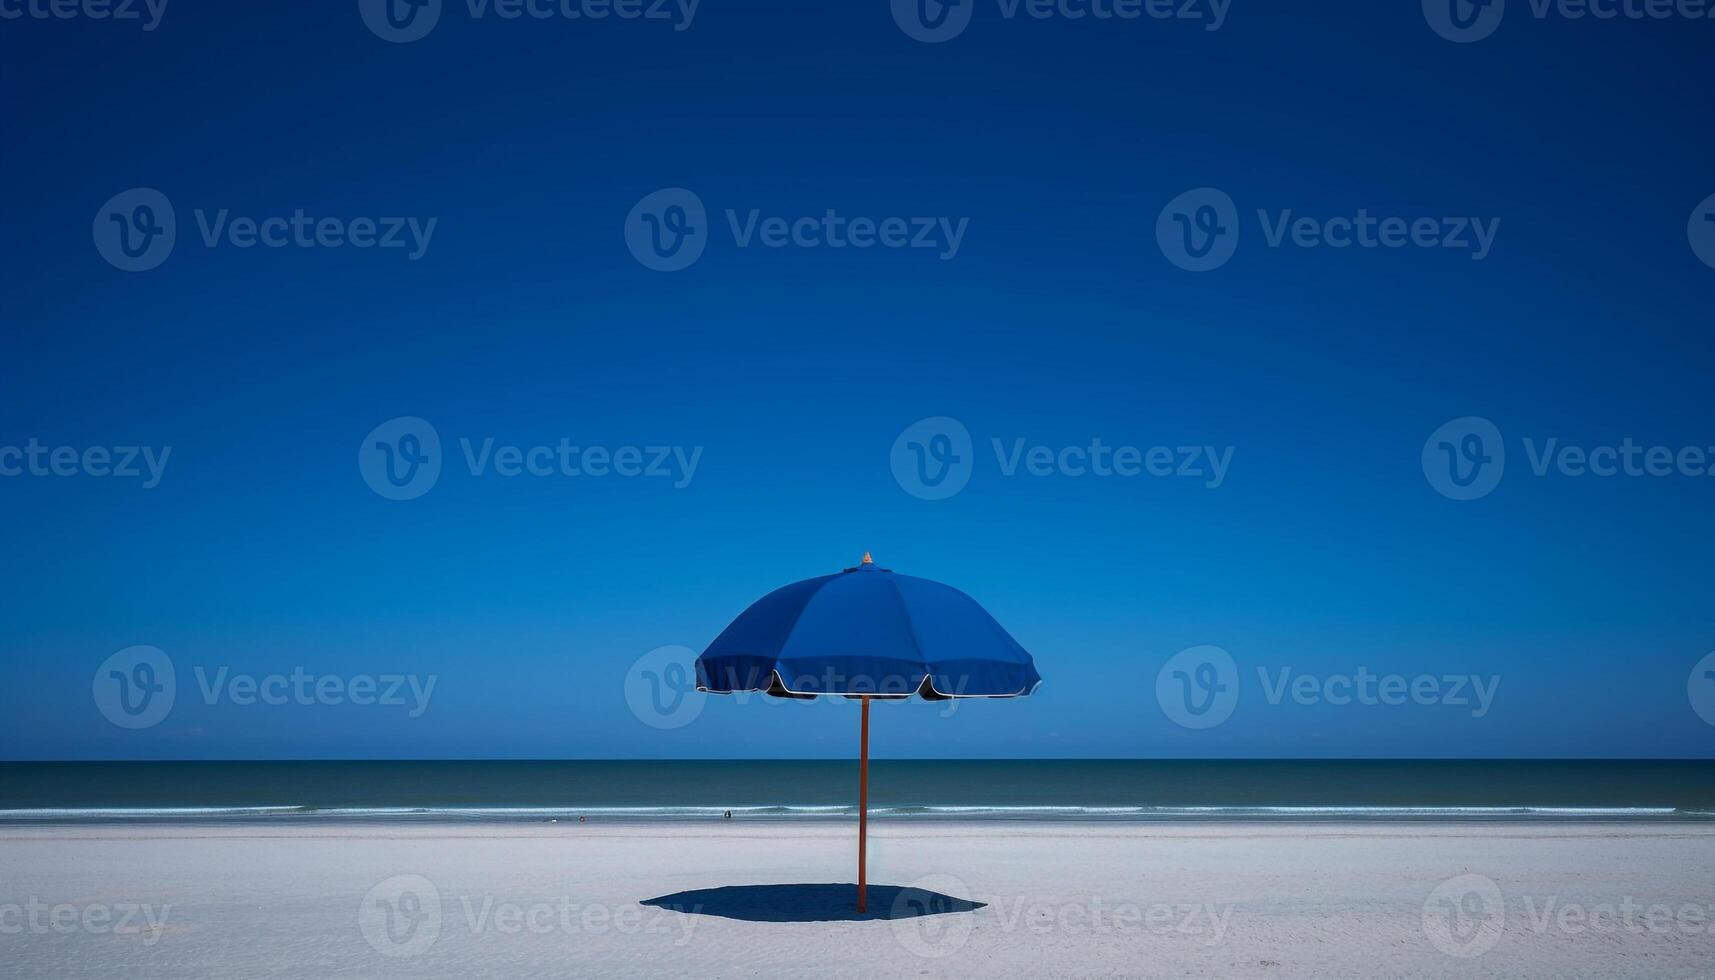 Blue umbrella shades lone beachgoer at sunset generated by AI photo